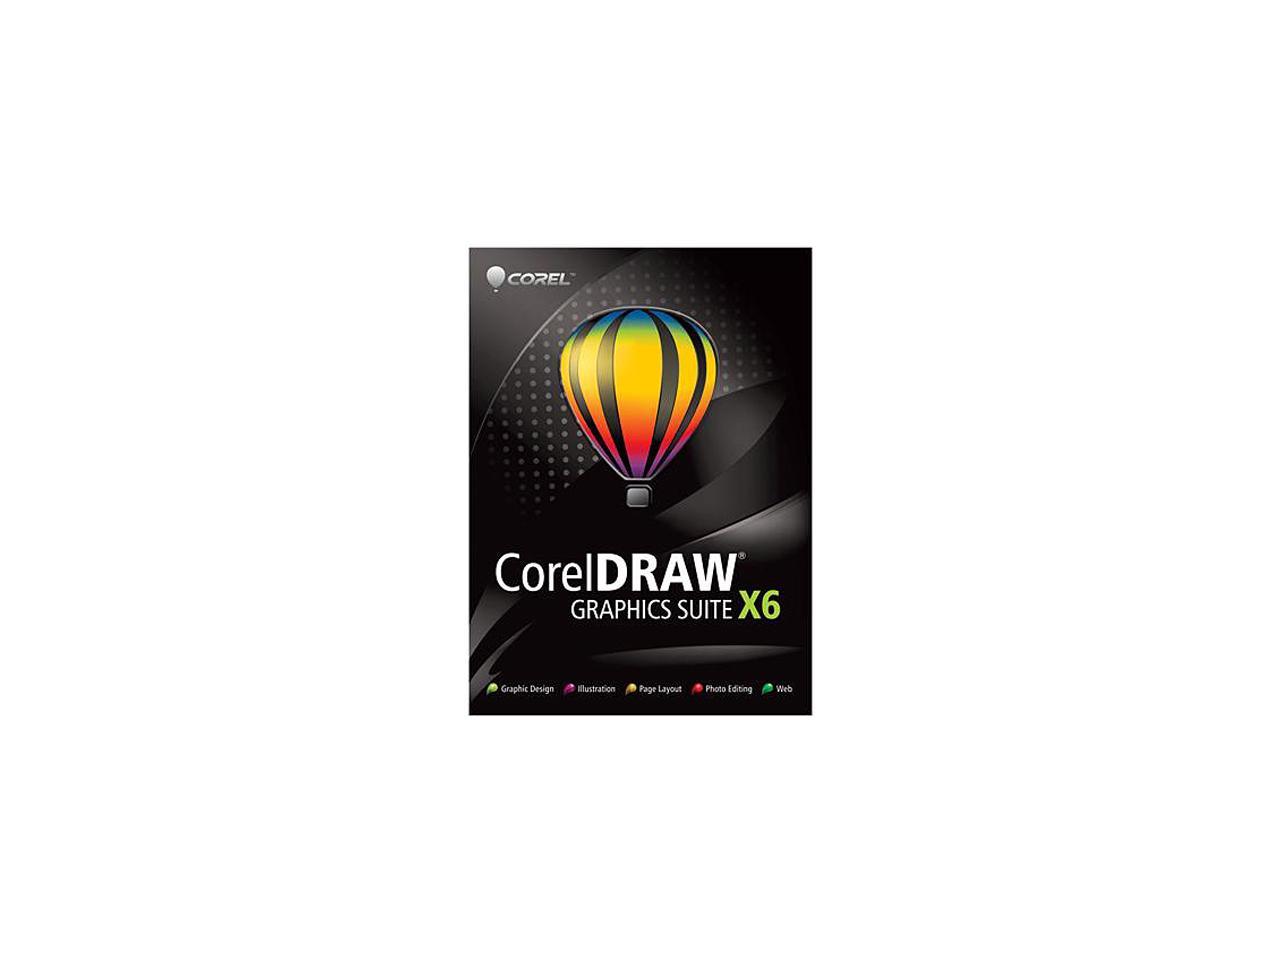 coreldraw graphics suite x6 review